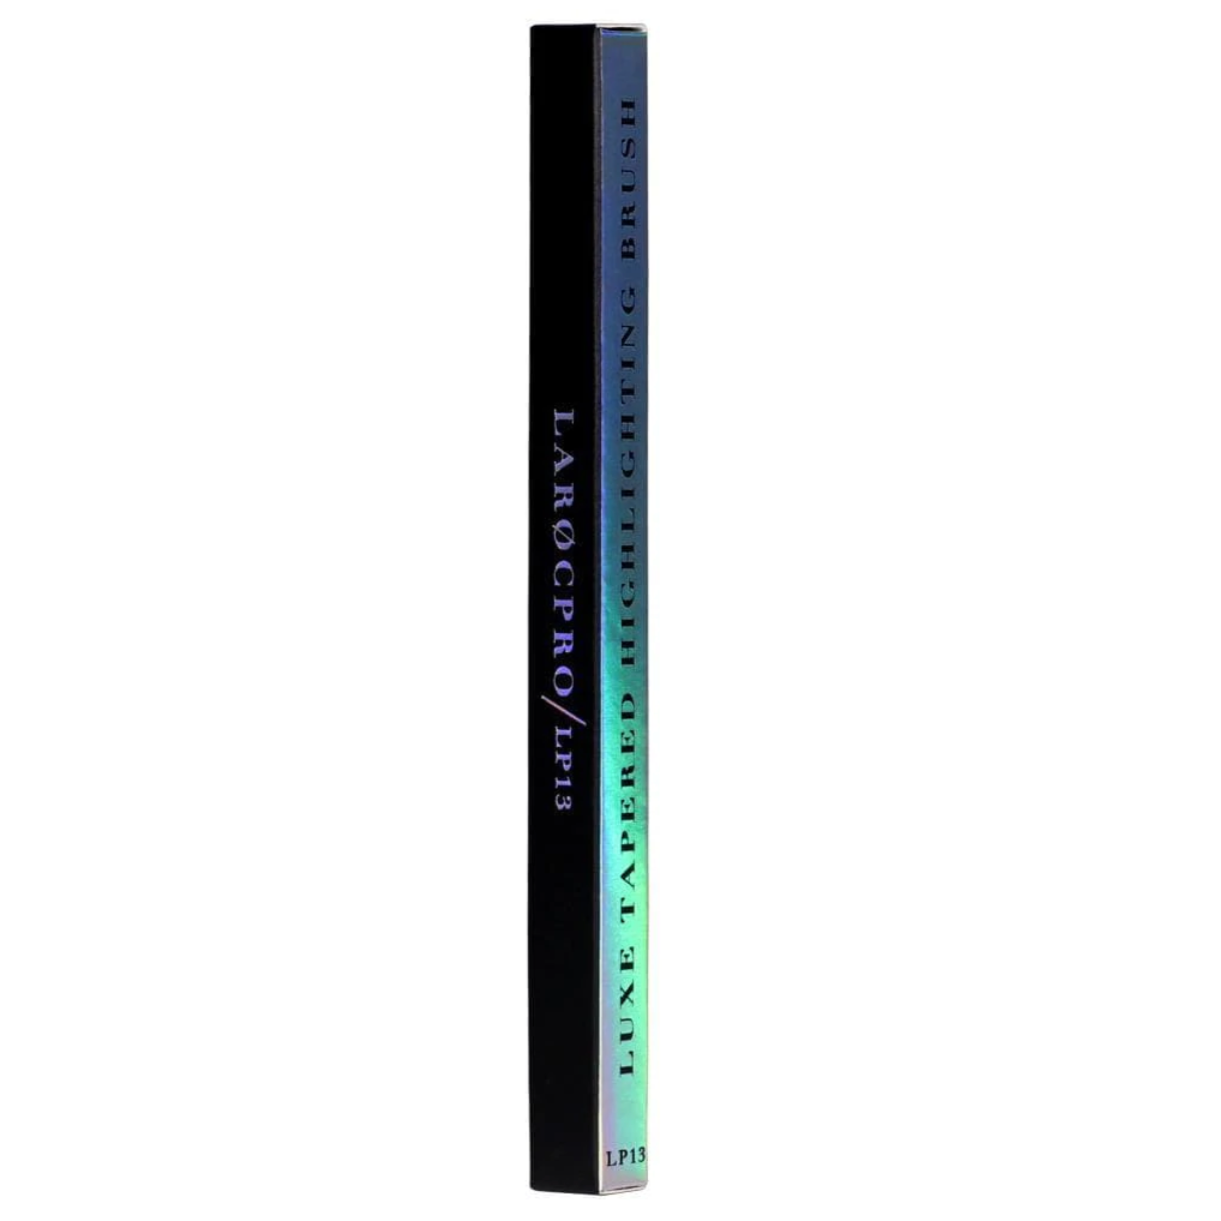 LaRoc Luxe Tapered Highlighting Brush LP13, packaging